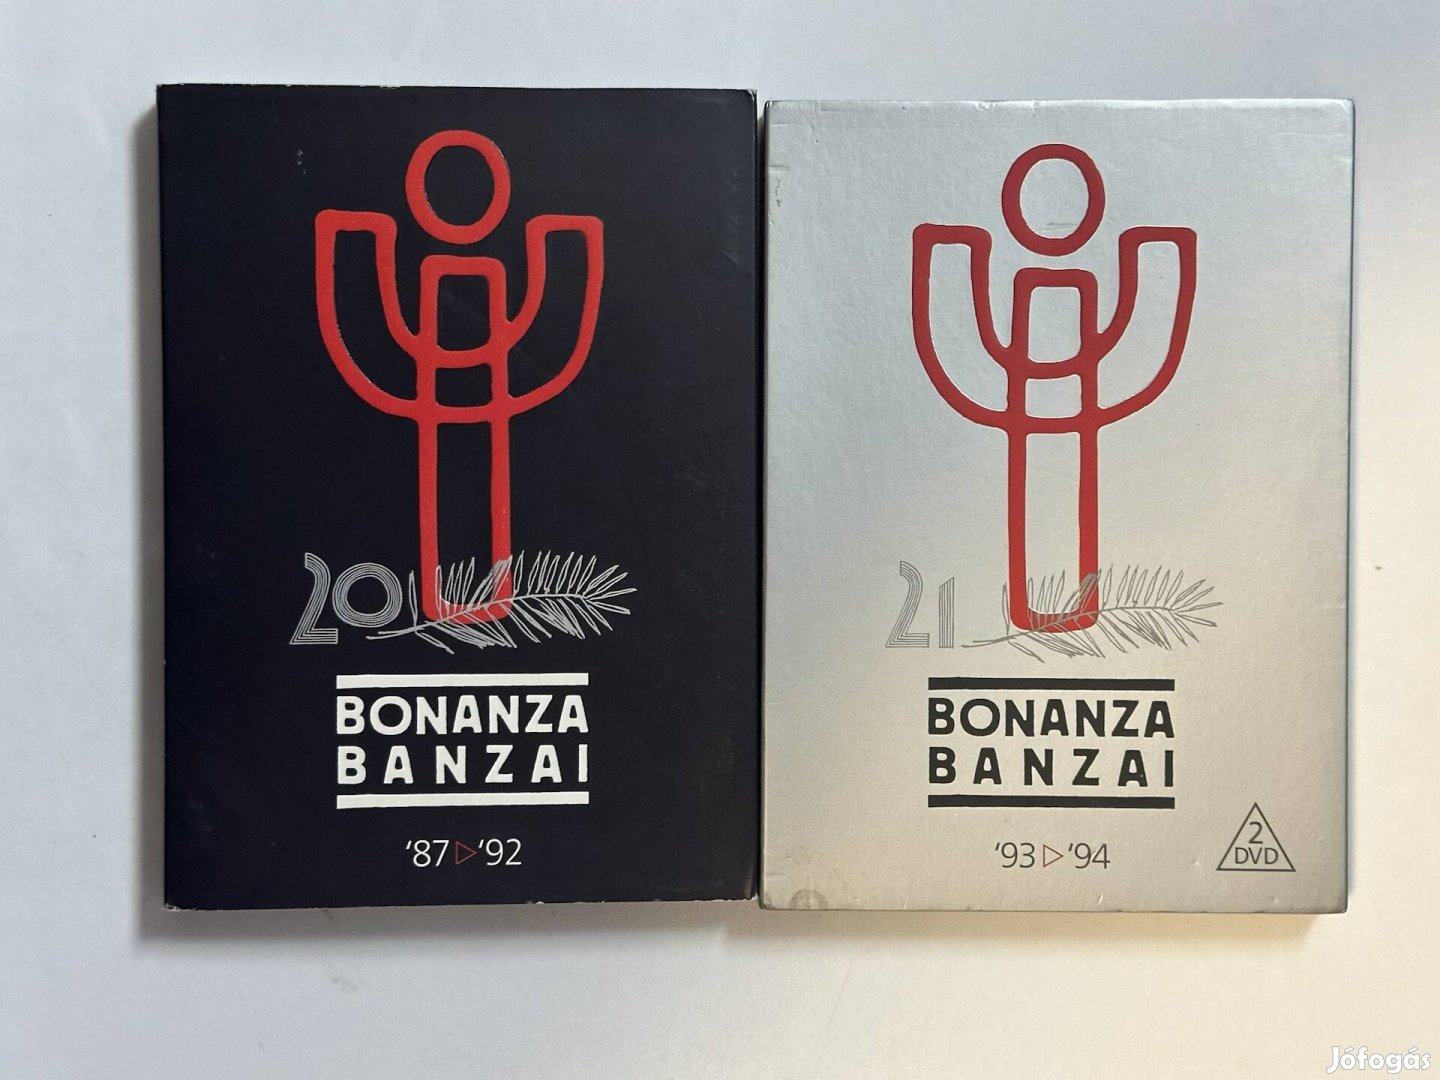 Bonanza Banzai 87-92 és a 93-94 dvd